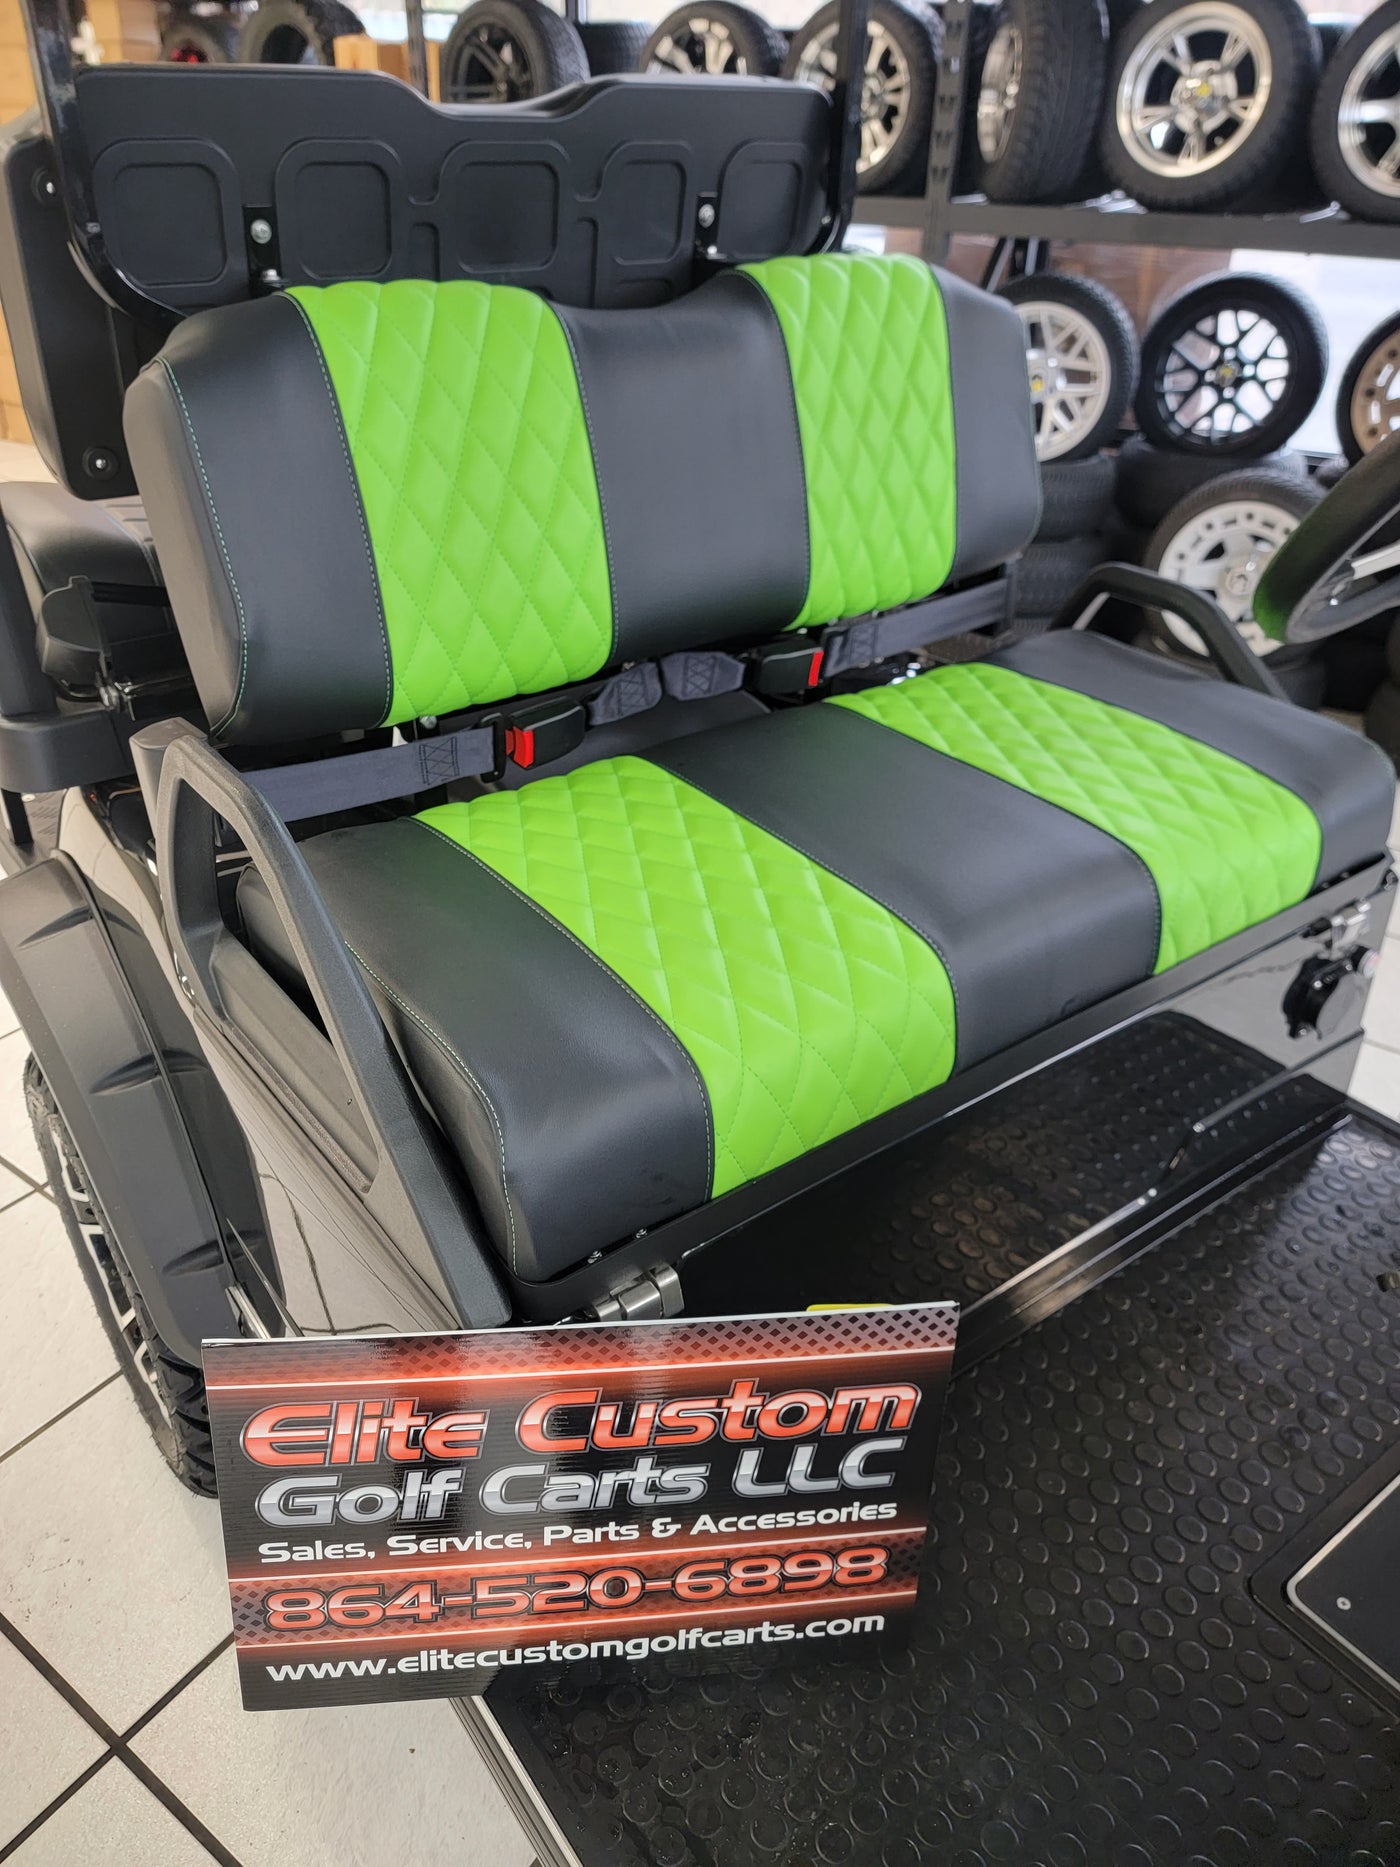 Evolution EV Golf Cart Custom Diamond Stich Seat Covers Black & Neon Green Diamond Stich fits Evolutions Classic Pro & Plus, Carrier & Forester Models